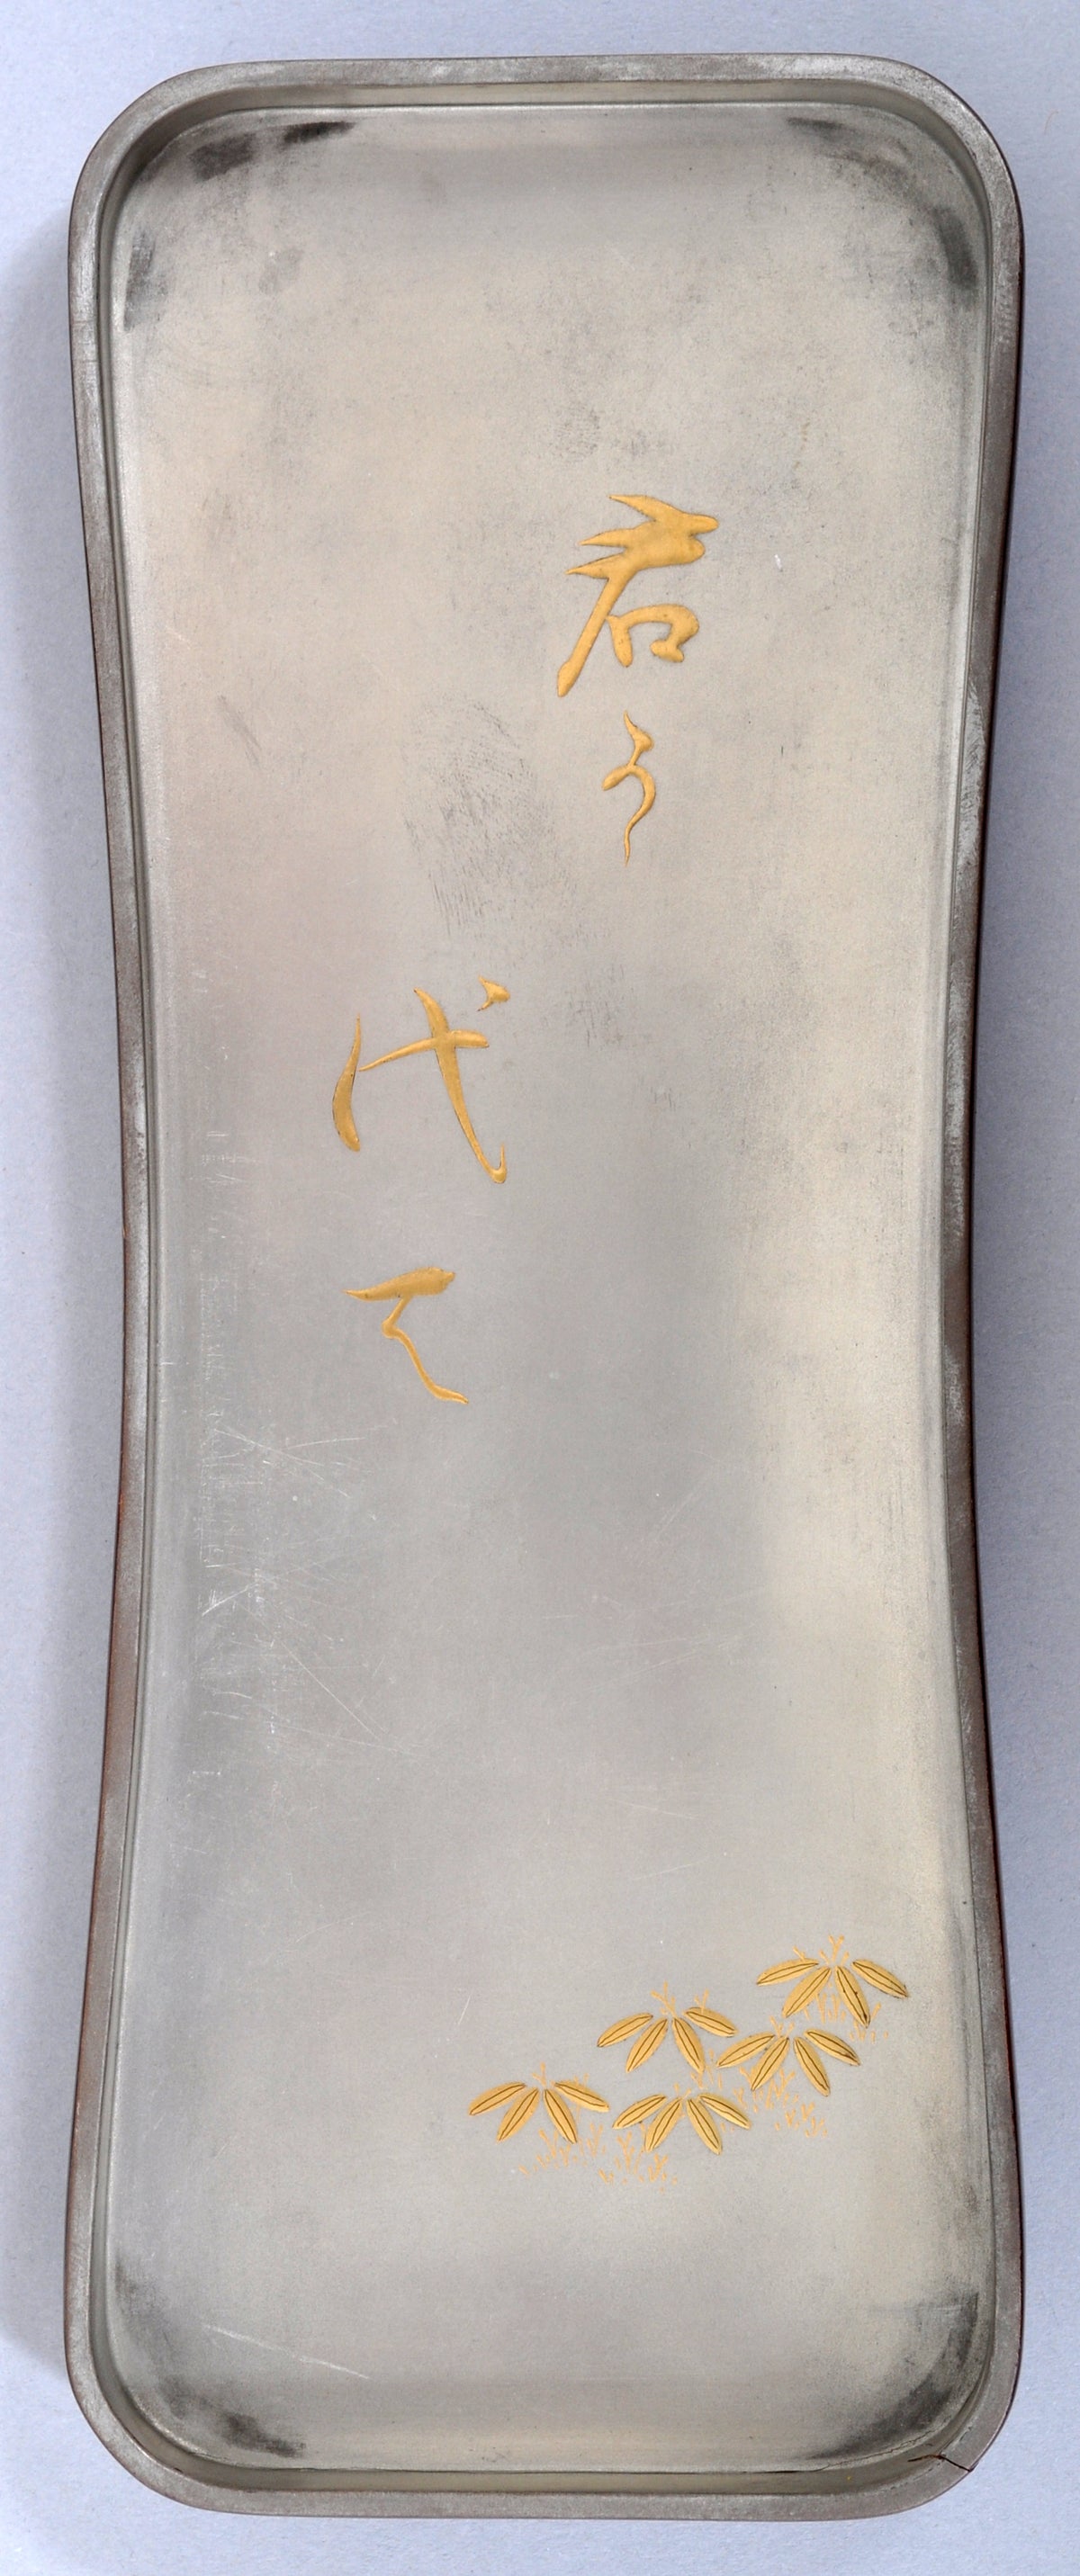 Antique Japanese Lacquer Pen Scribe's Calligraphy Set and Case, Meiji Period, Circa 1880